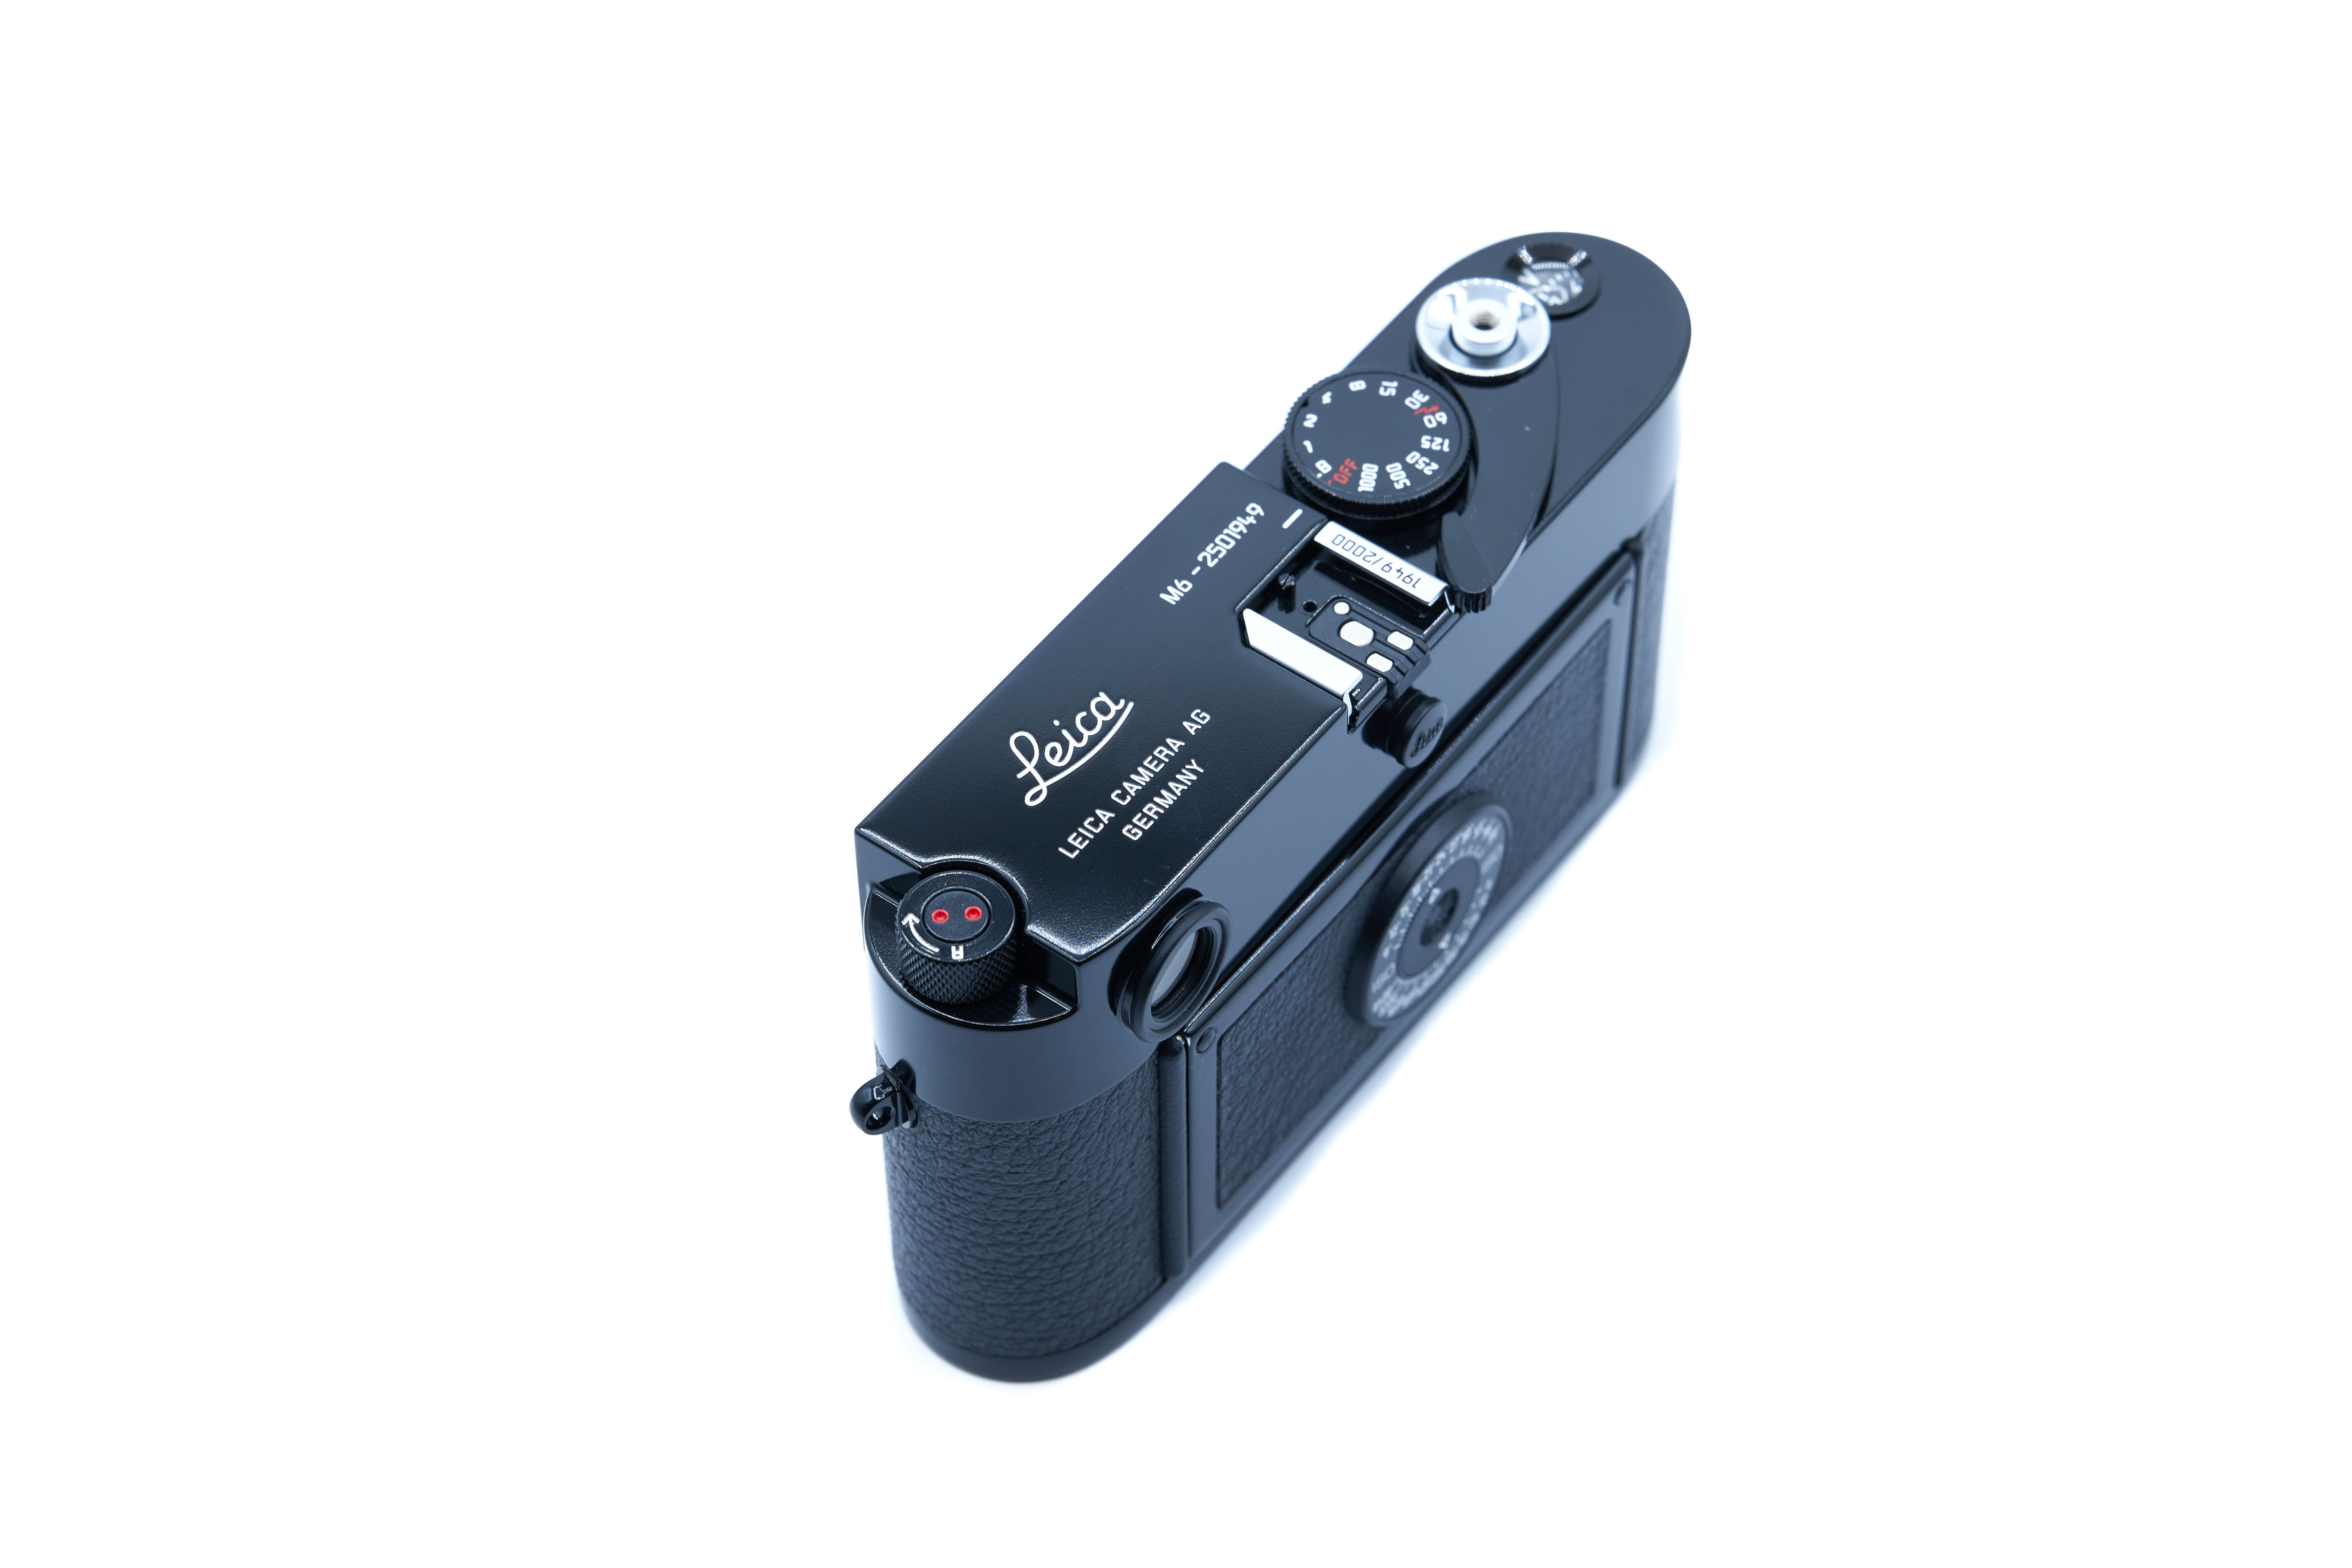 Leica M6 TTL Millennium Edition with Summilux-M 50mm f1.4 Black Paint